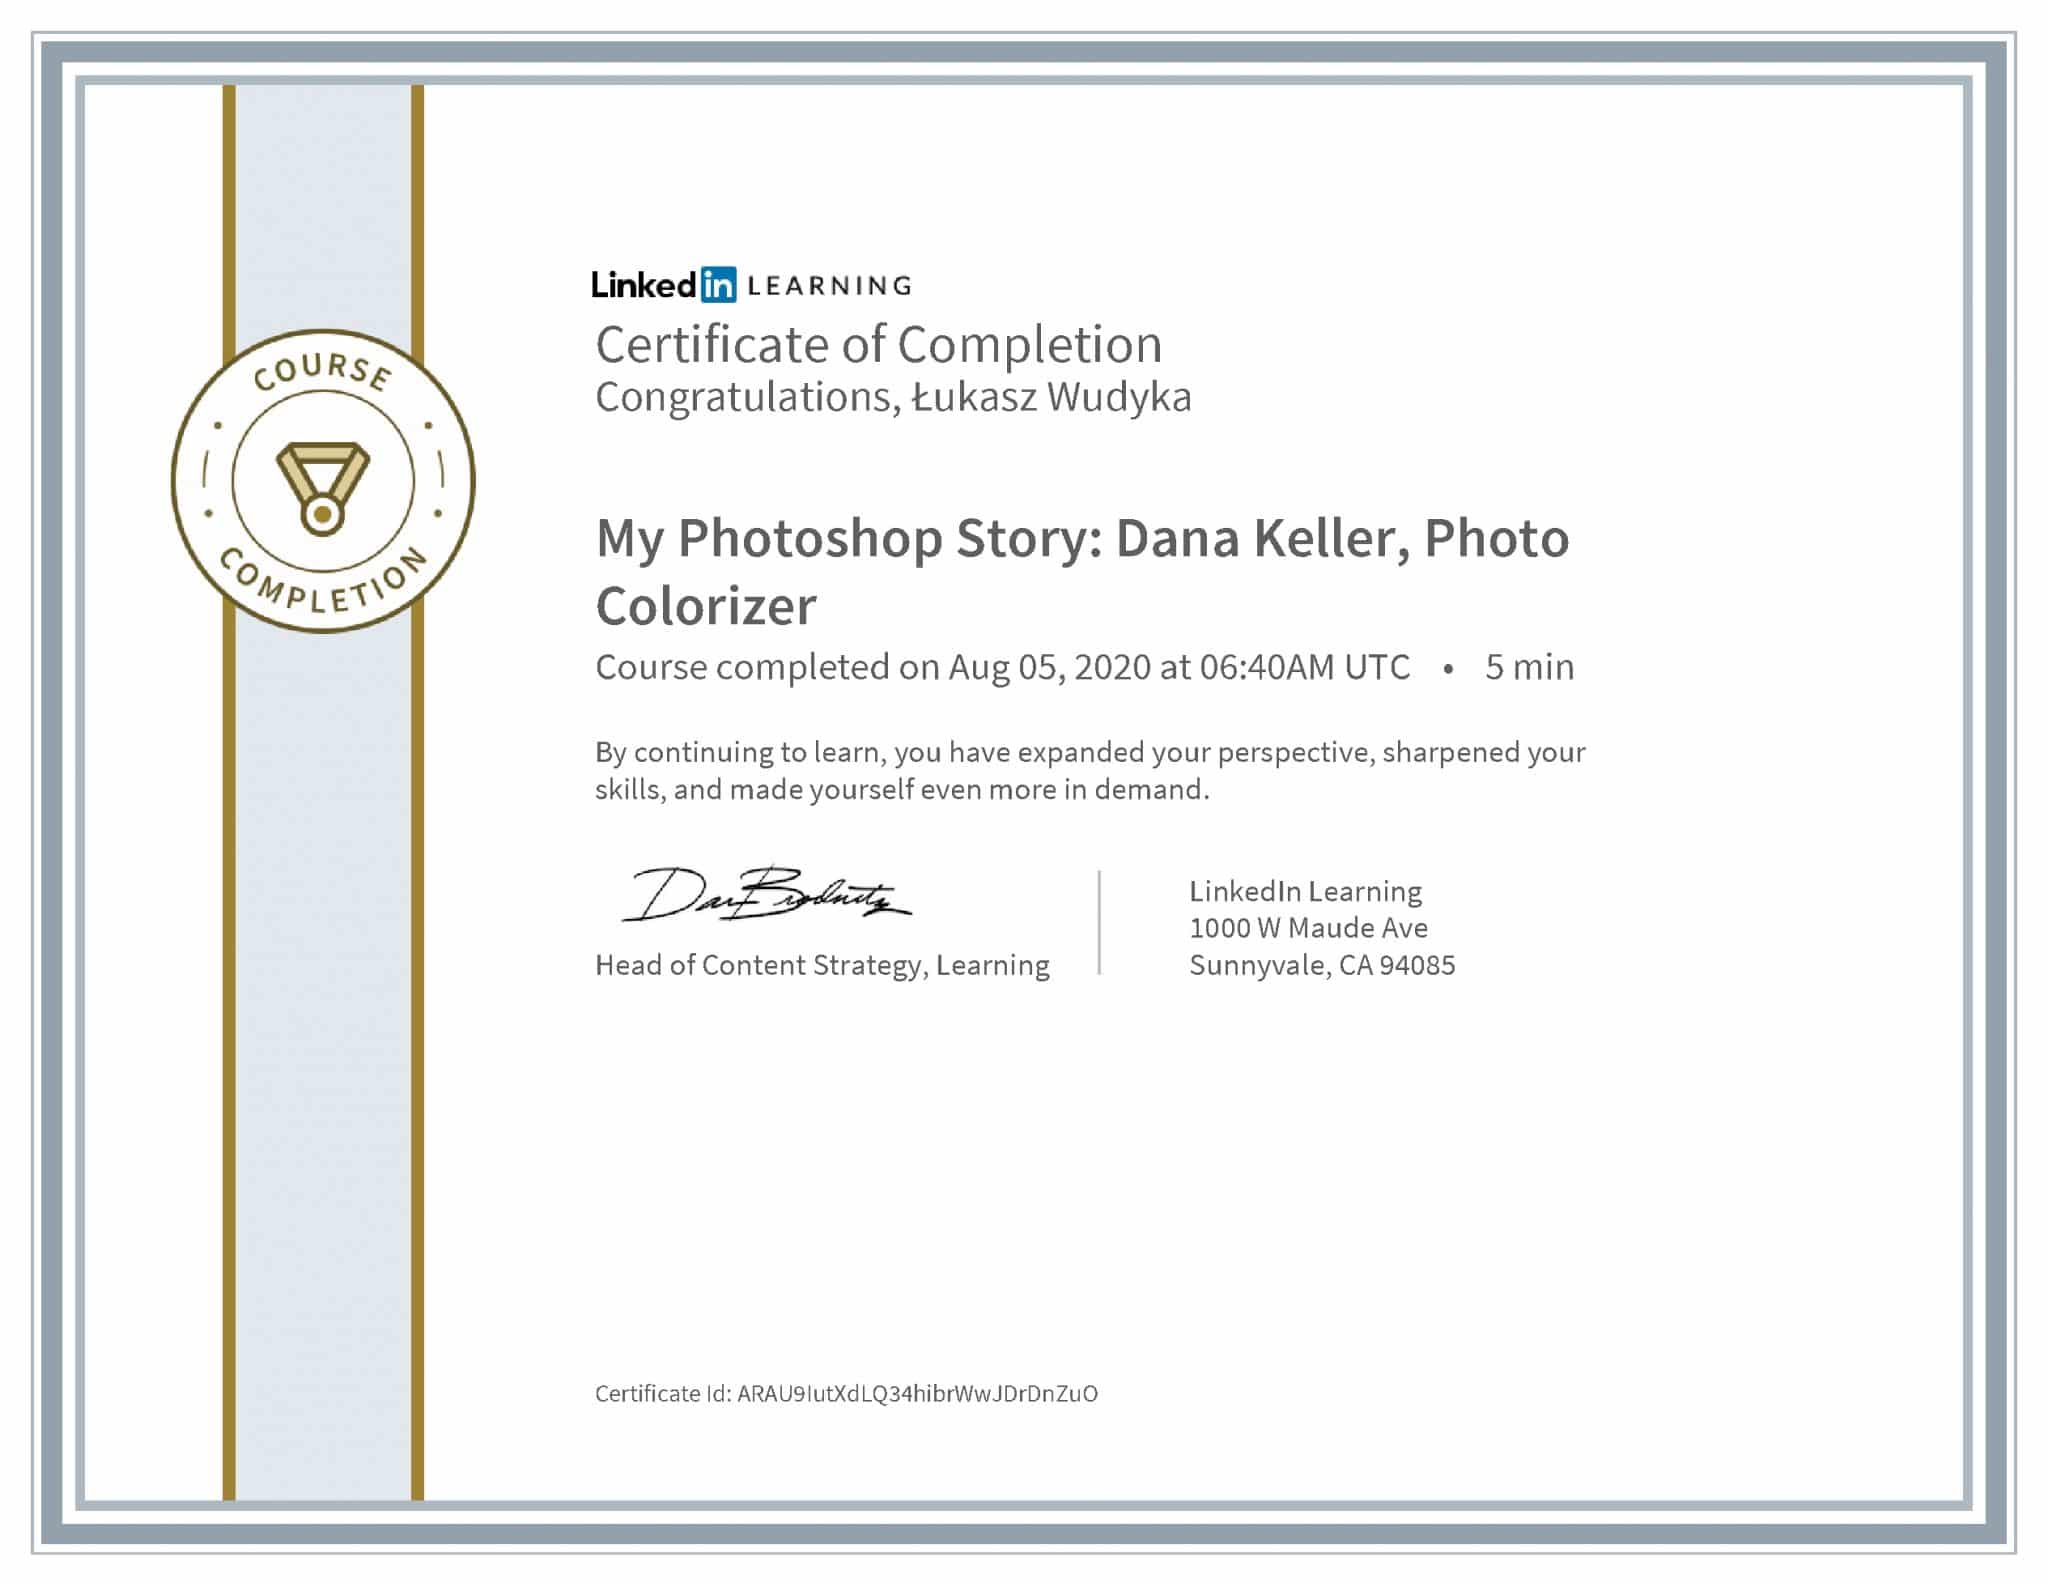 Łukasz Wudyka certyfikat LinkedIn My Photoshop Story: Dana Keller, Photo Colorizer